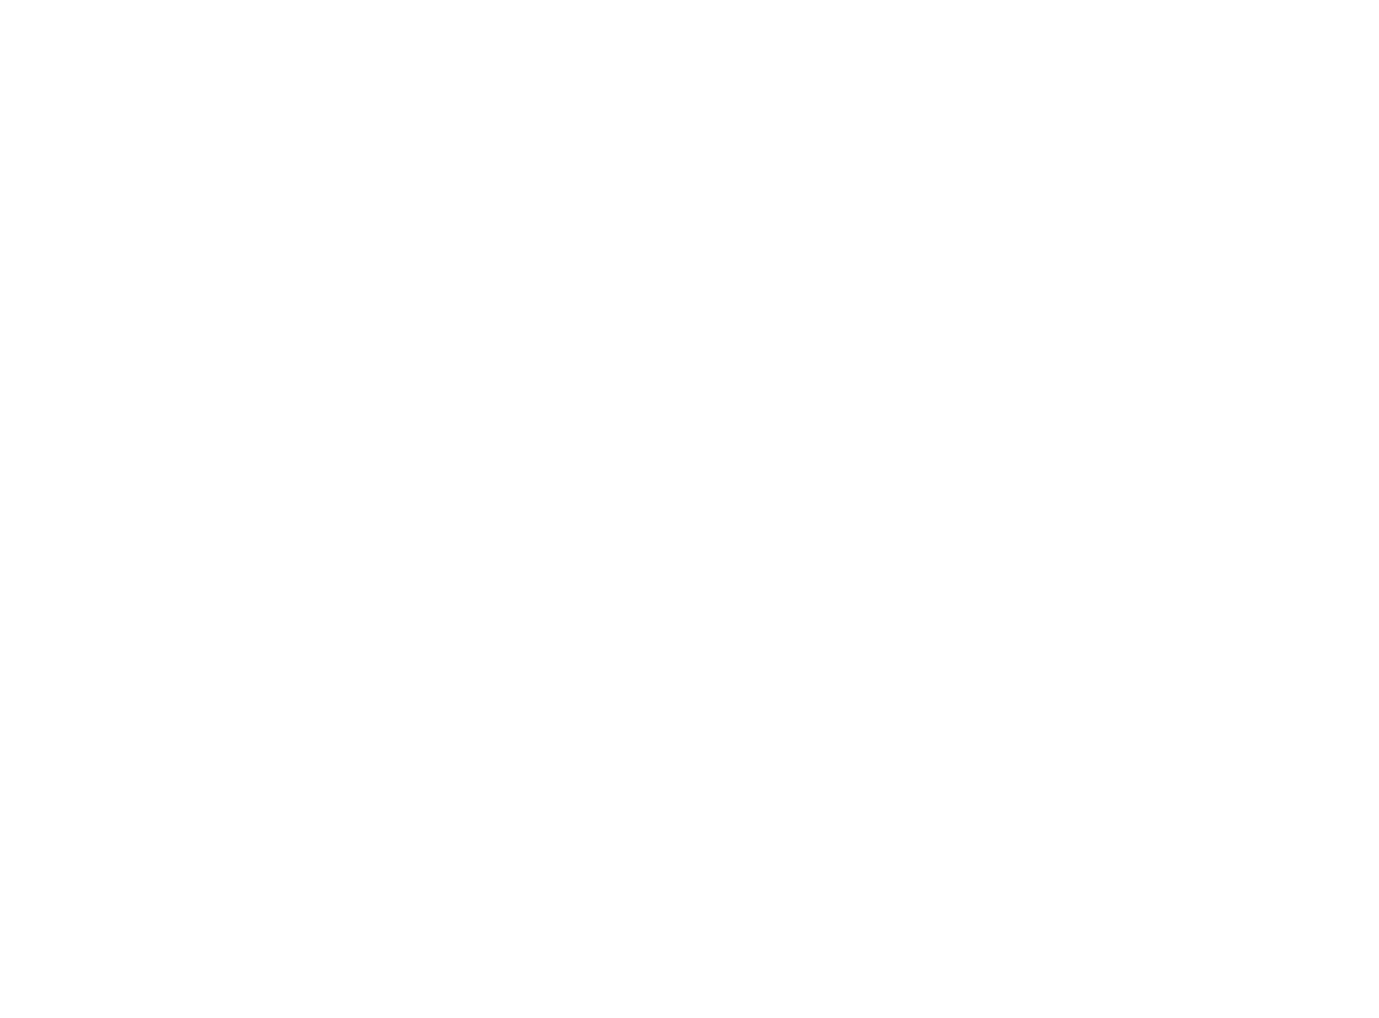 The FHI 360 logo.